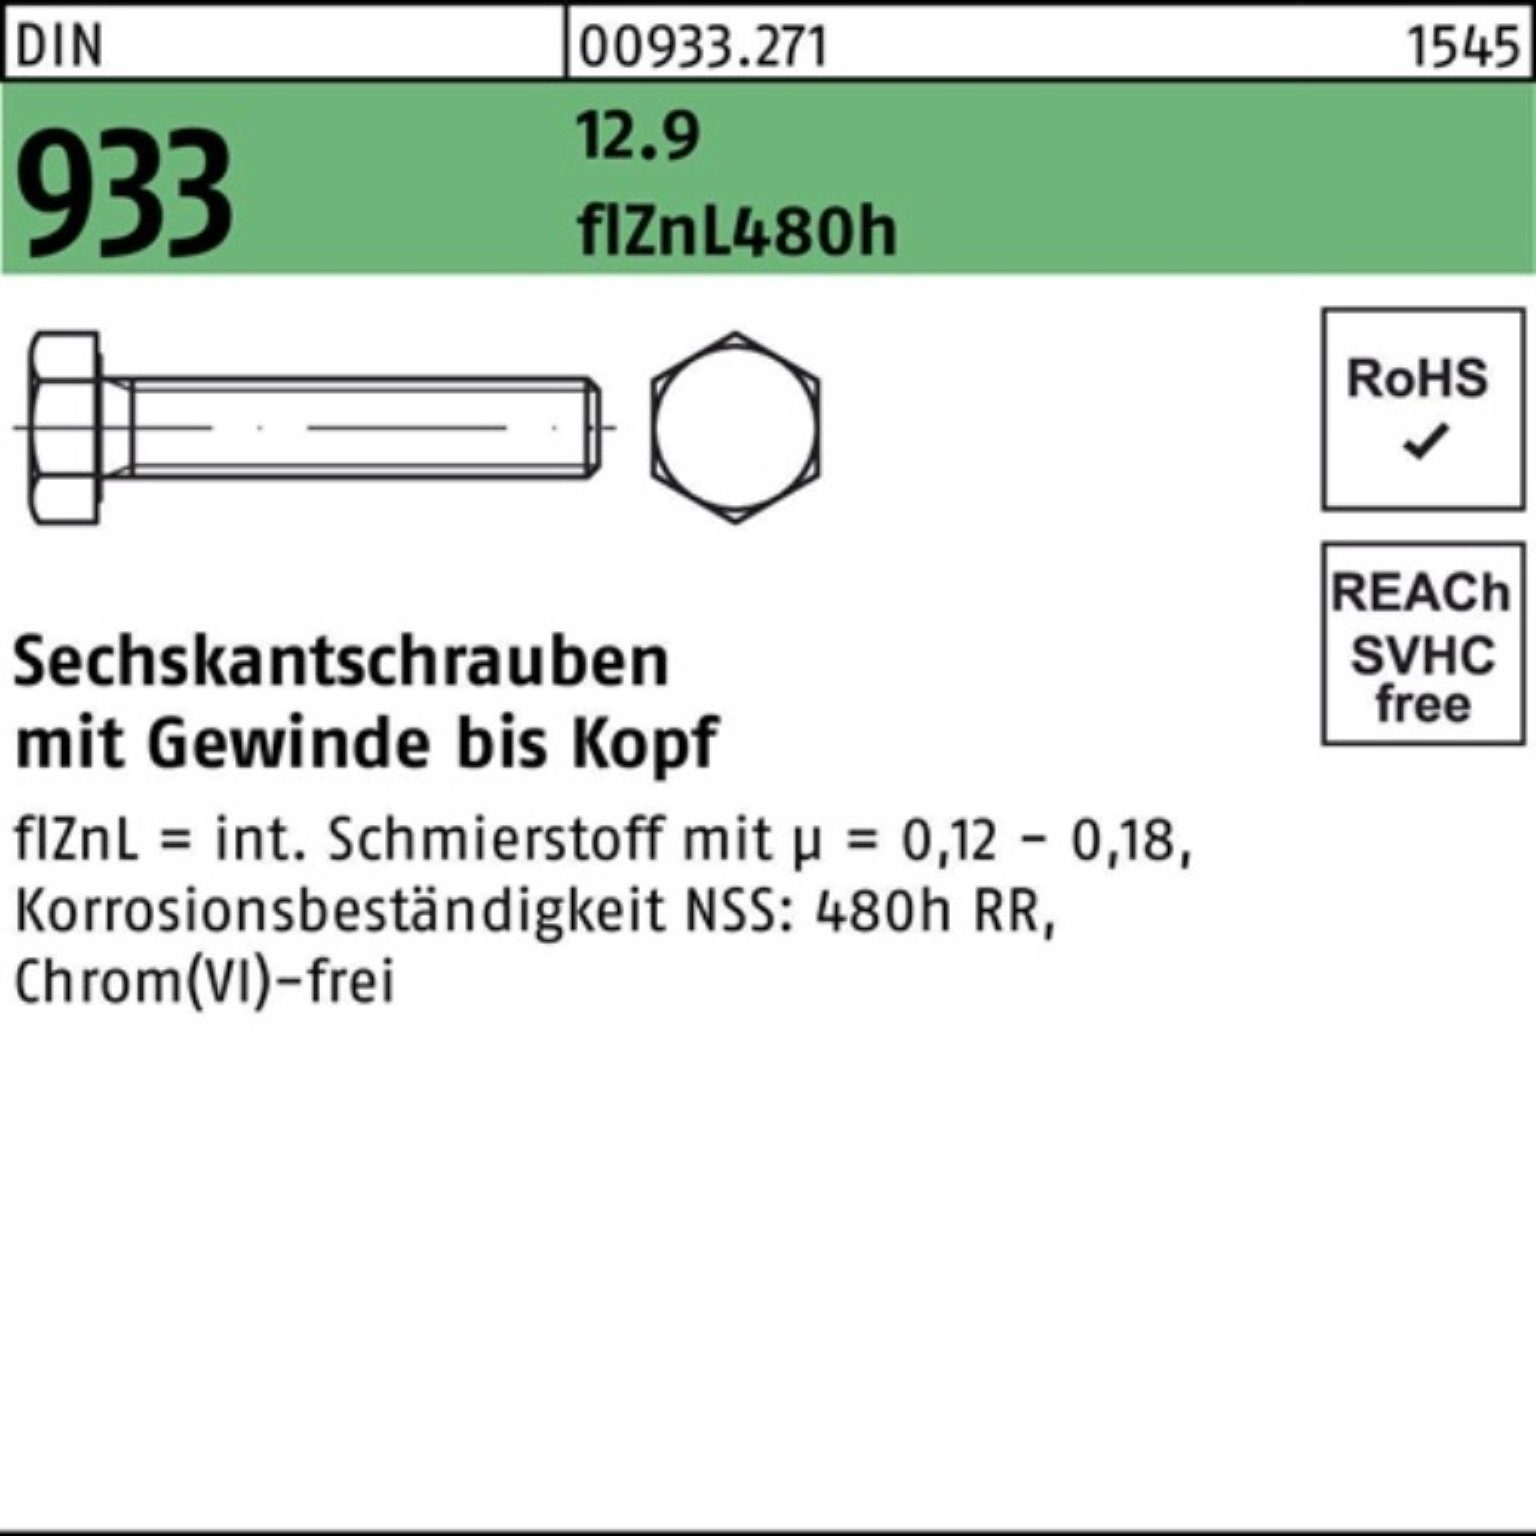 Reyher Sechskantschraube 100er Pack Sechskantschraube DIN 933 VG M16x 30 12.9 flZnL 480h zinkla